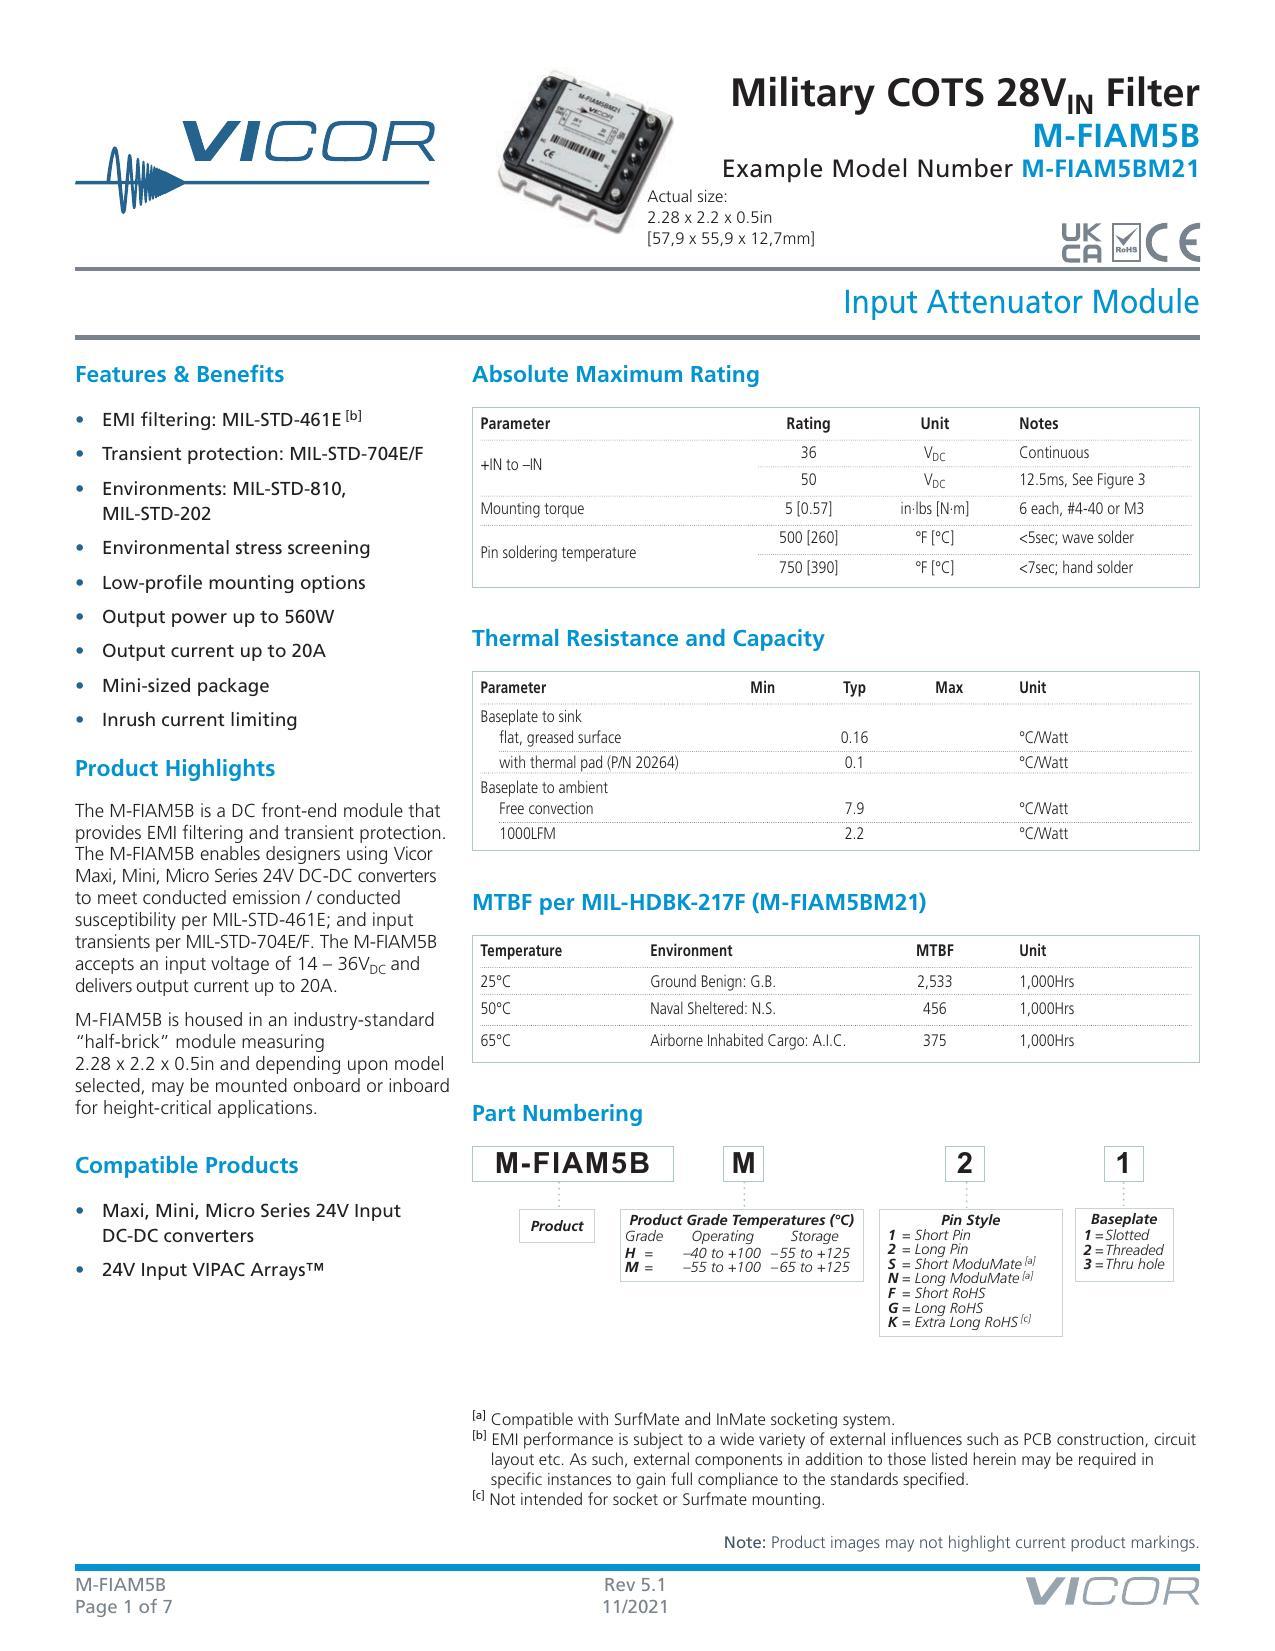 military-cots-28v-filter-m-fiamsb.pdf